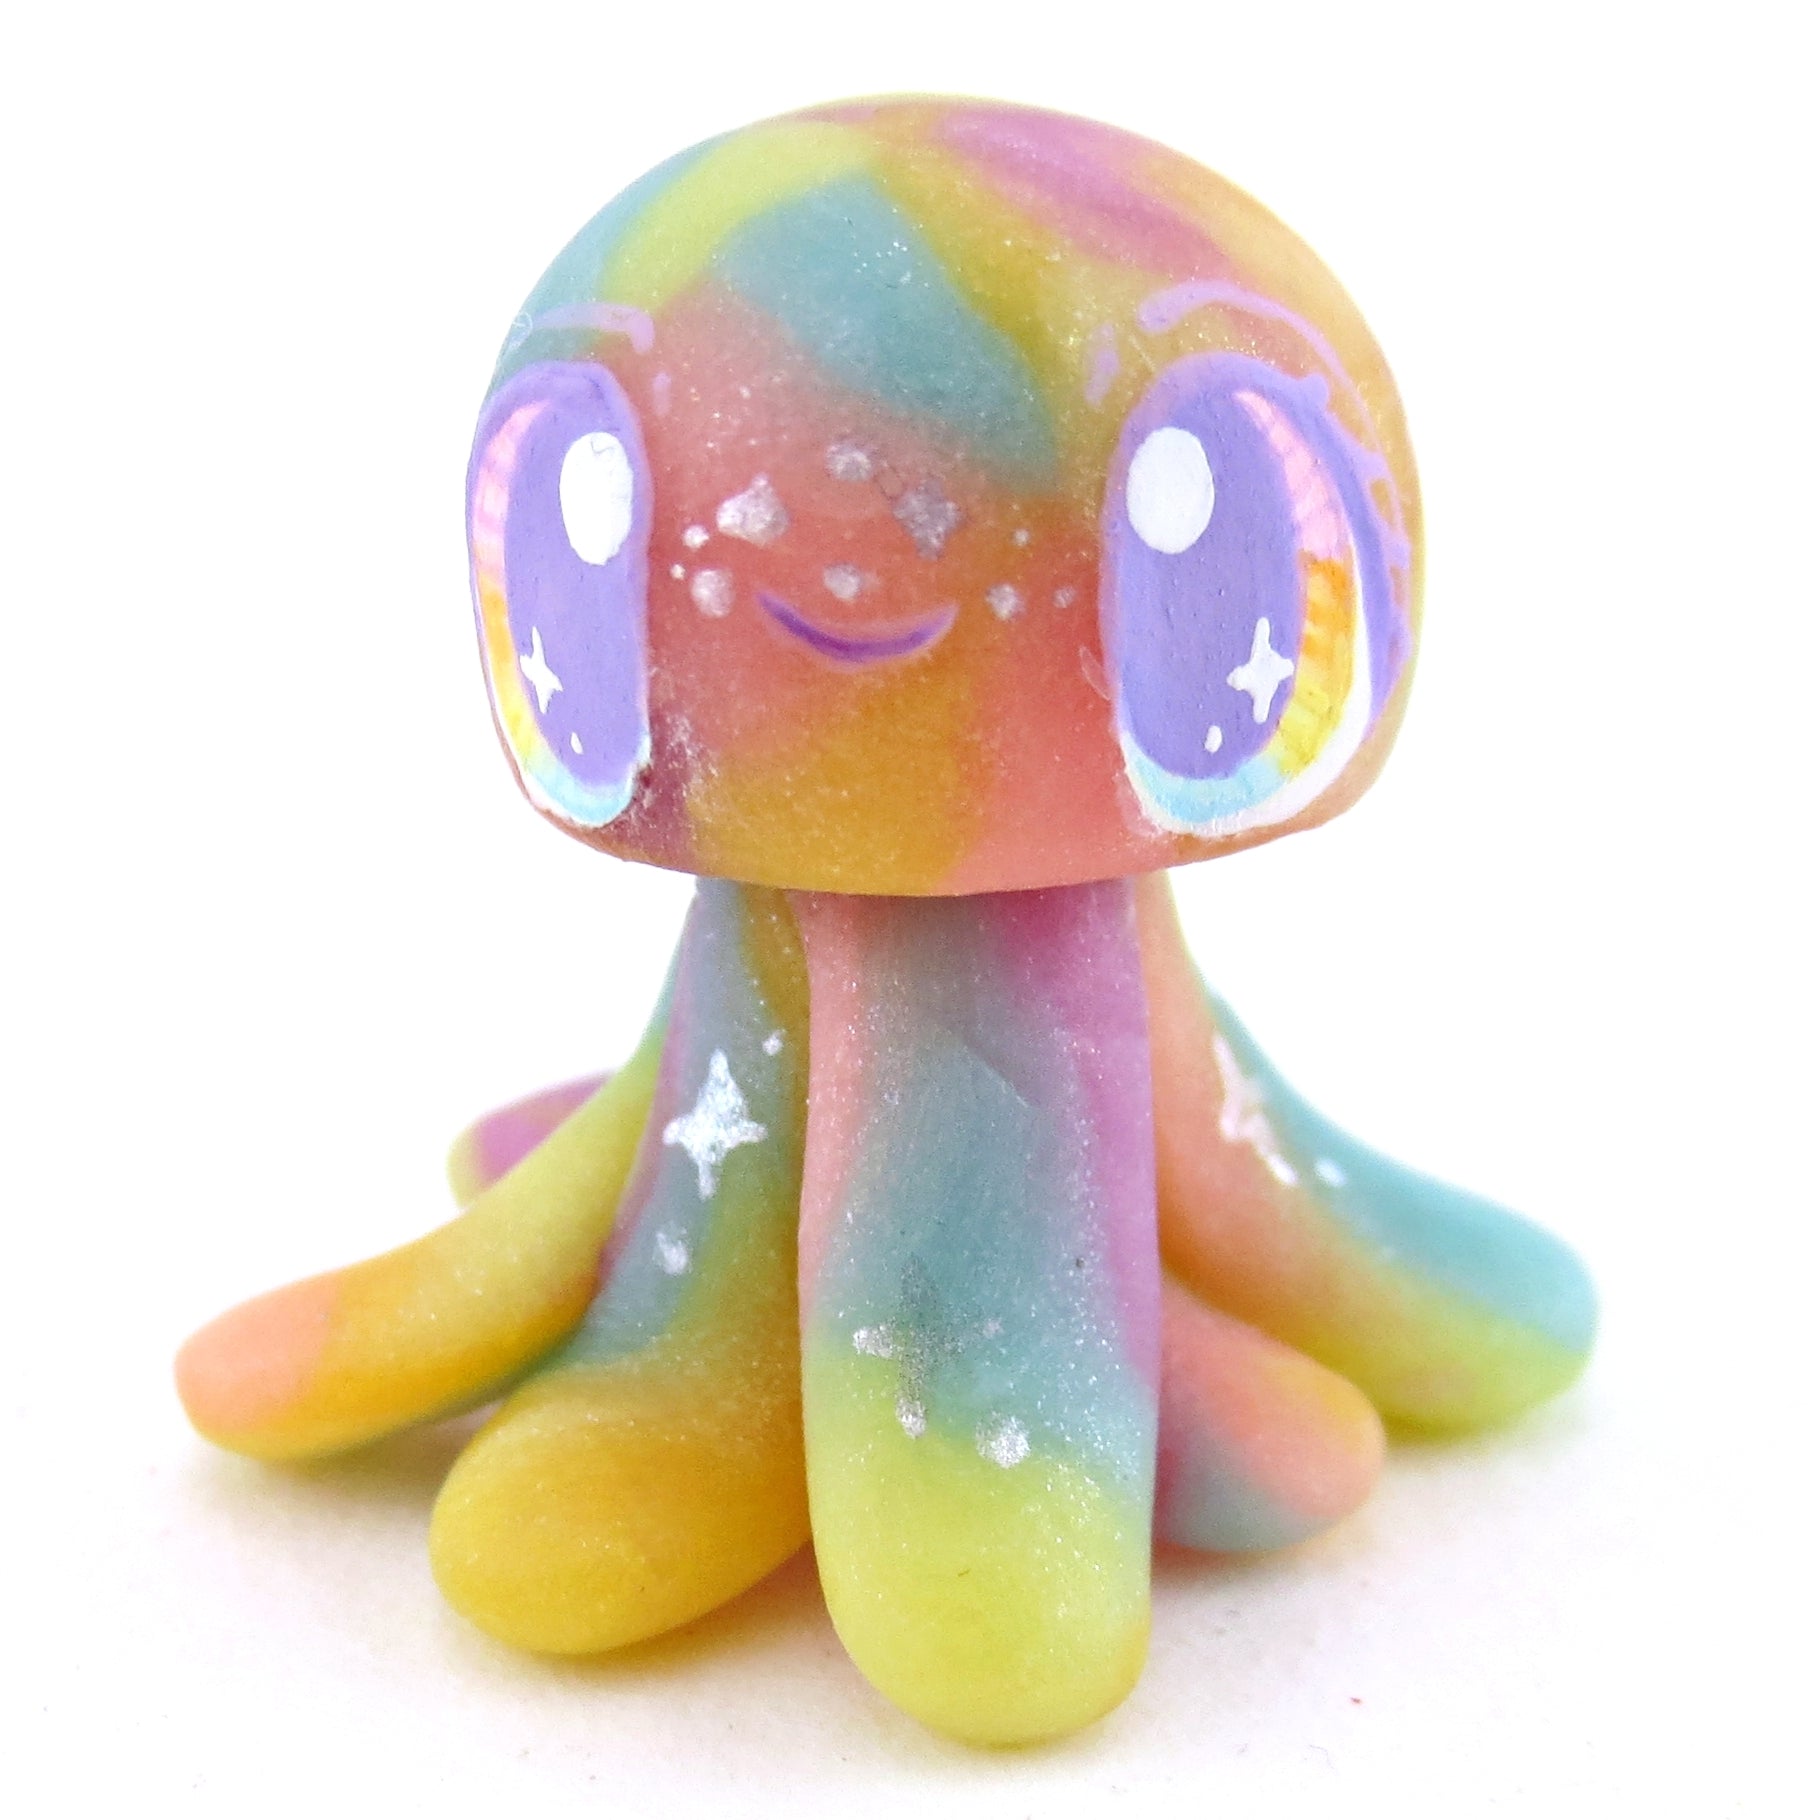 Rainbow Jellyfish Jelly Figurine - Polymer Clay Enchanted Ocean Animals